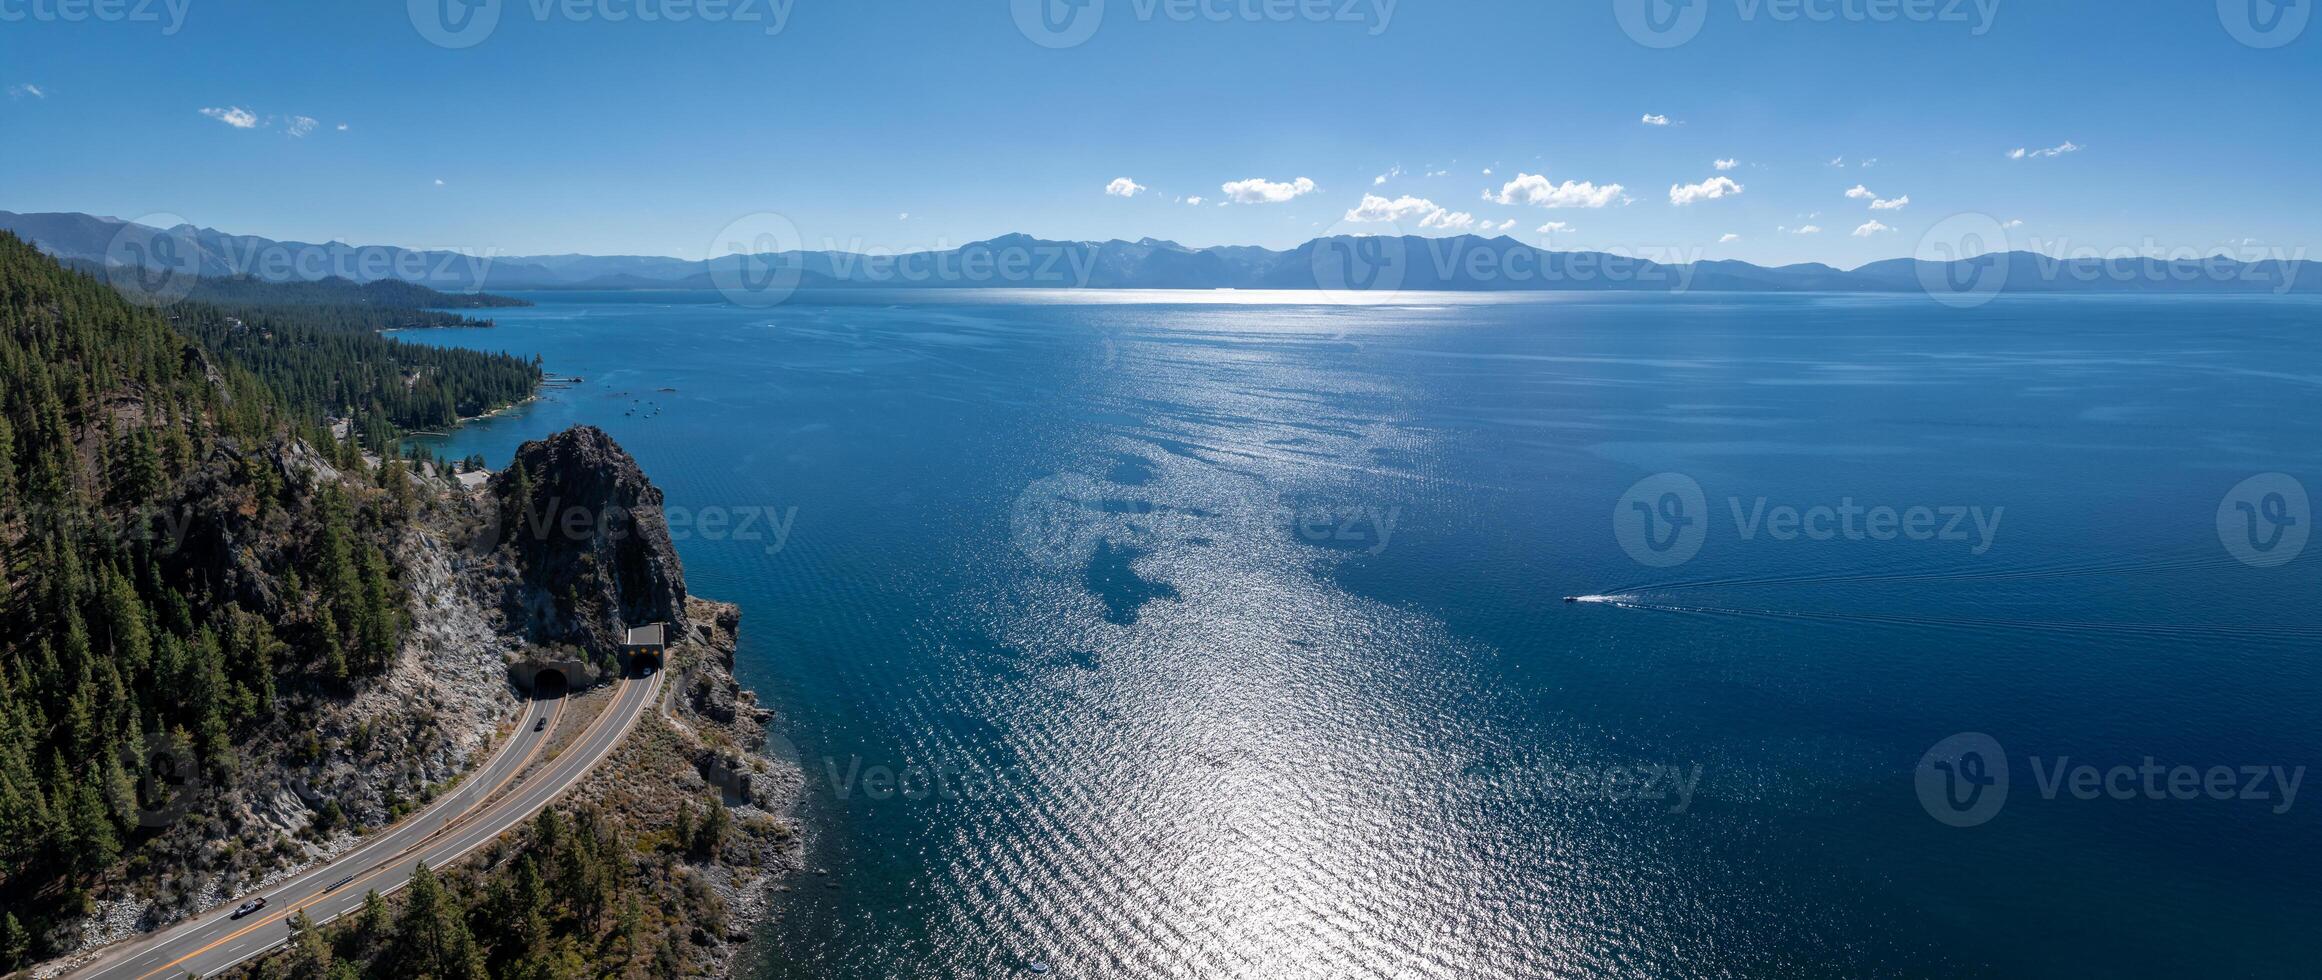 mooi antenne visie van de tahoe meer van bovenstaand in Californië, Verenigde Staten van Amerika. foto